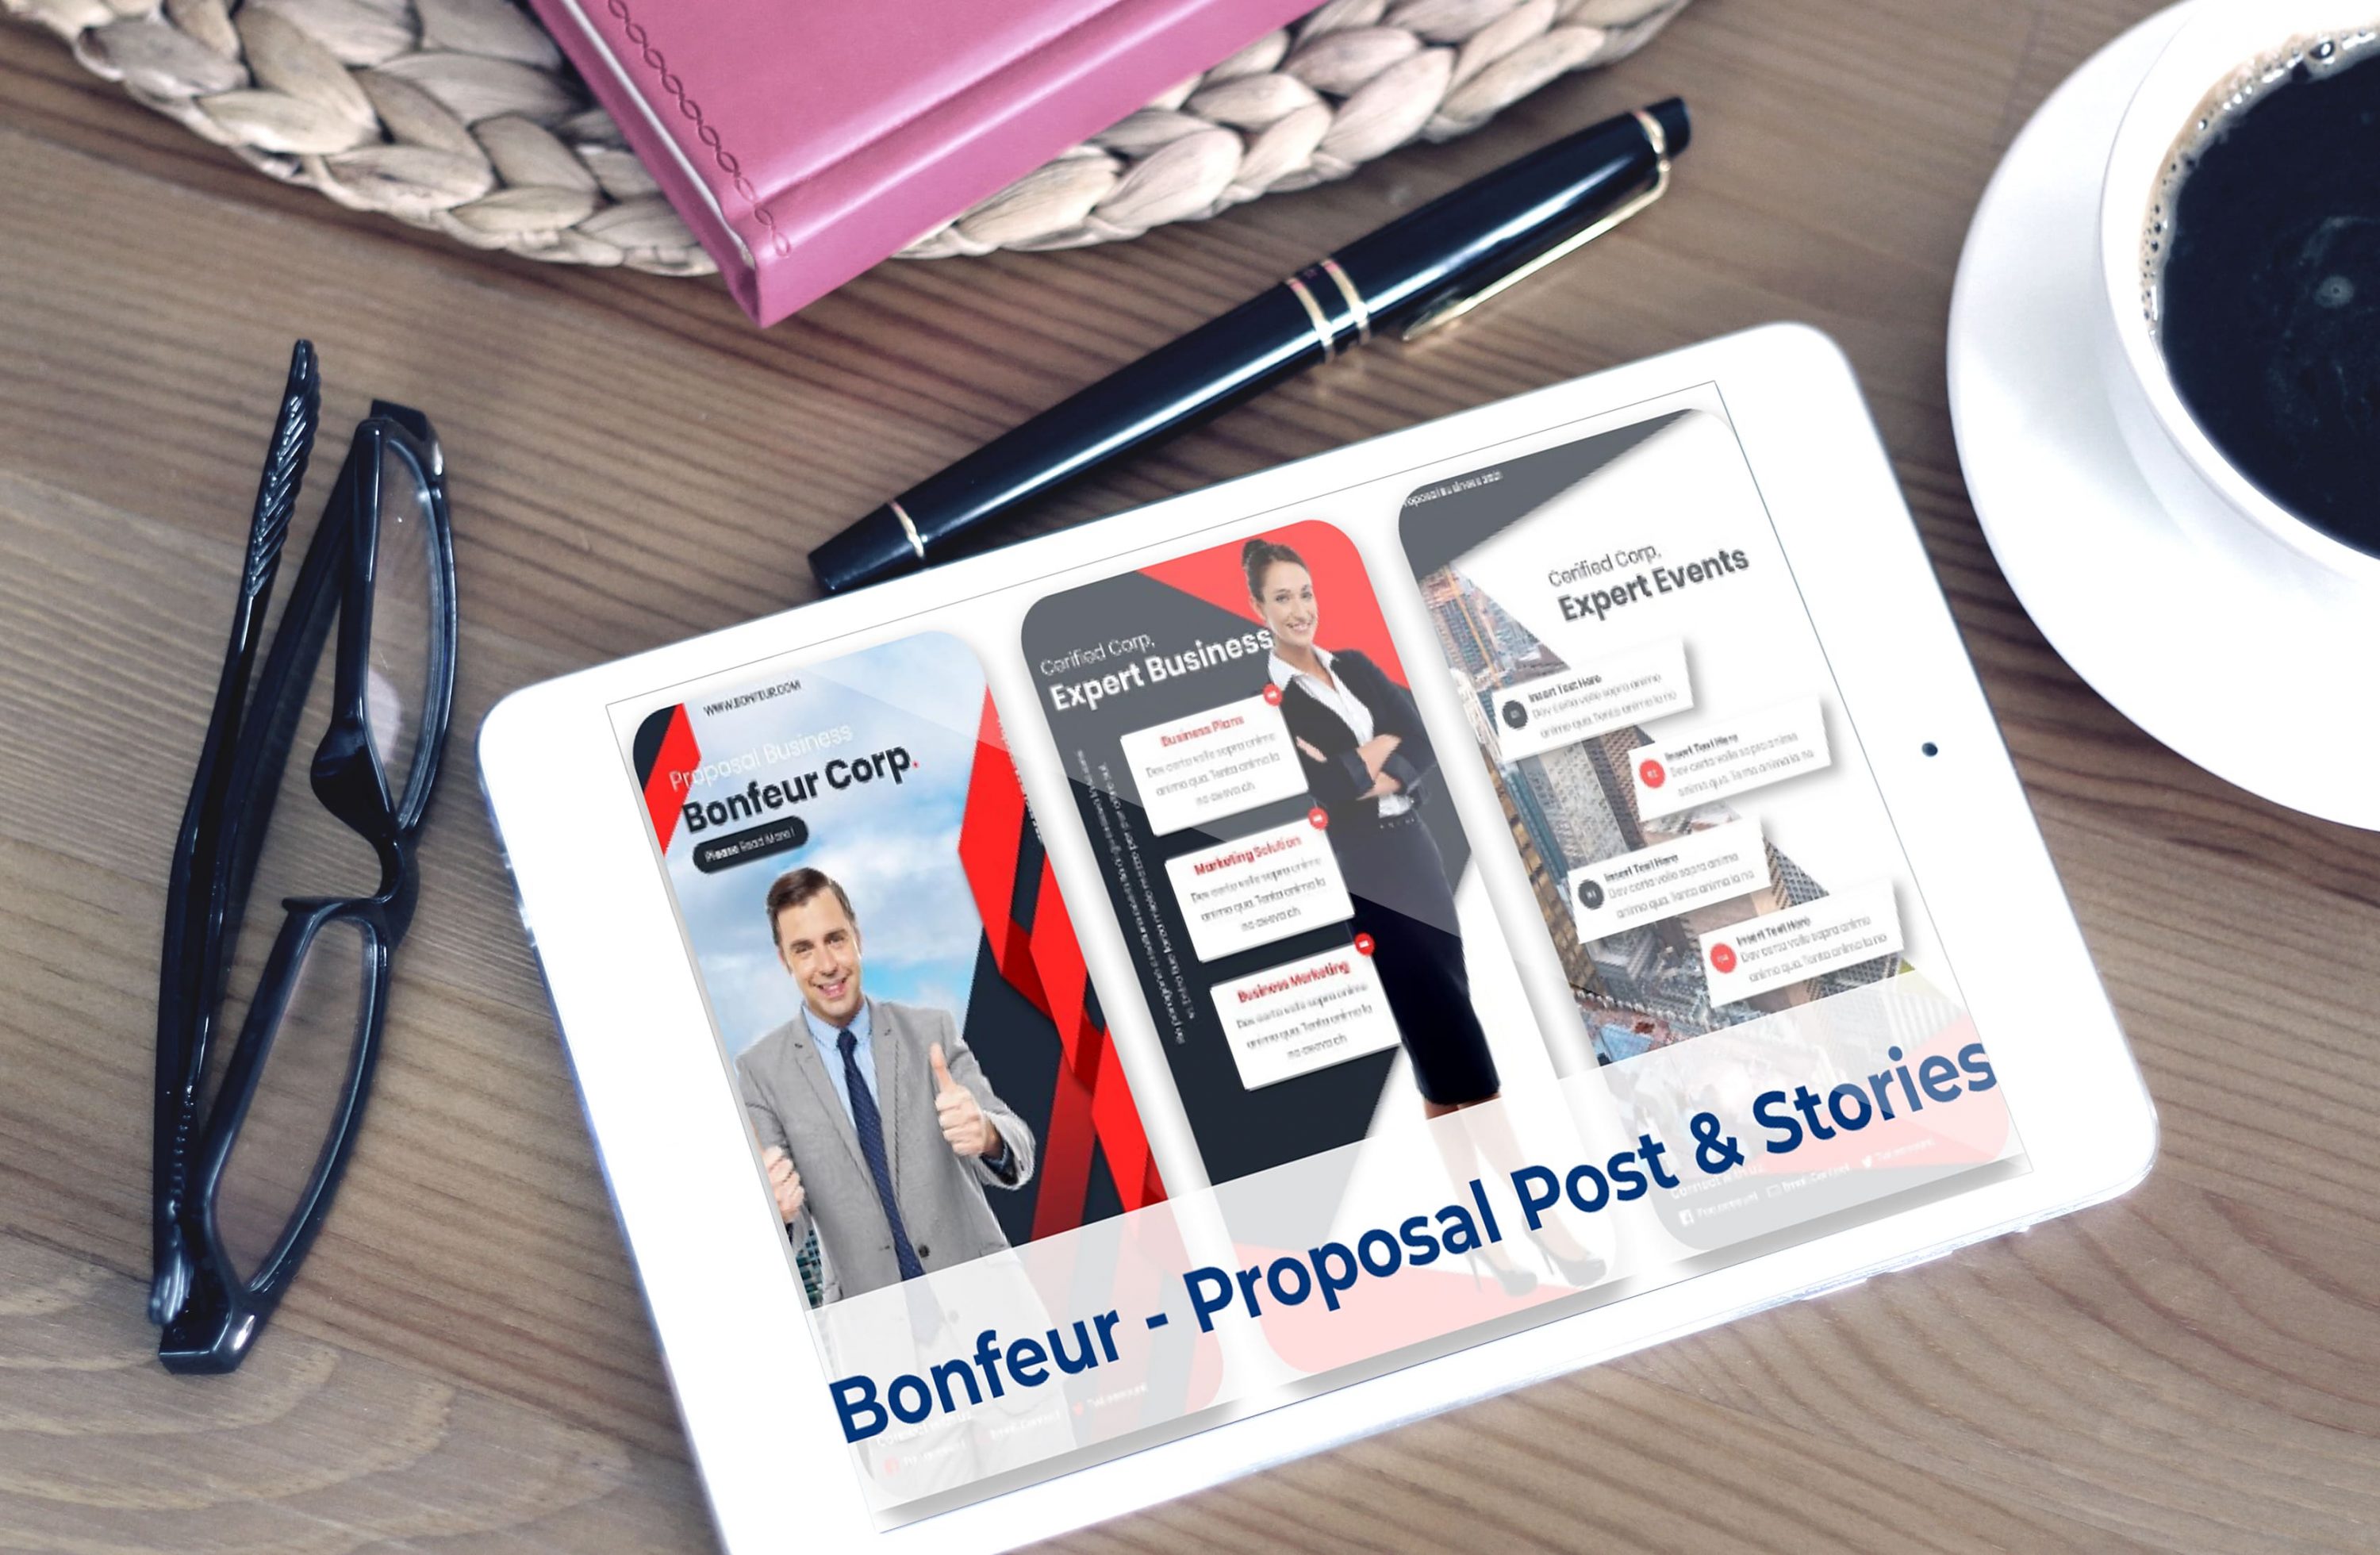 Tablet option of the Bonfeur - Proposal Post & Stories.